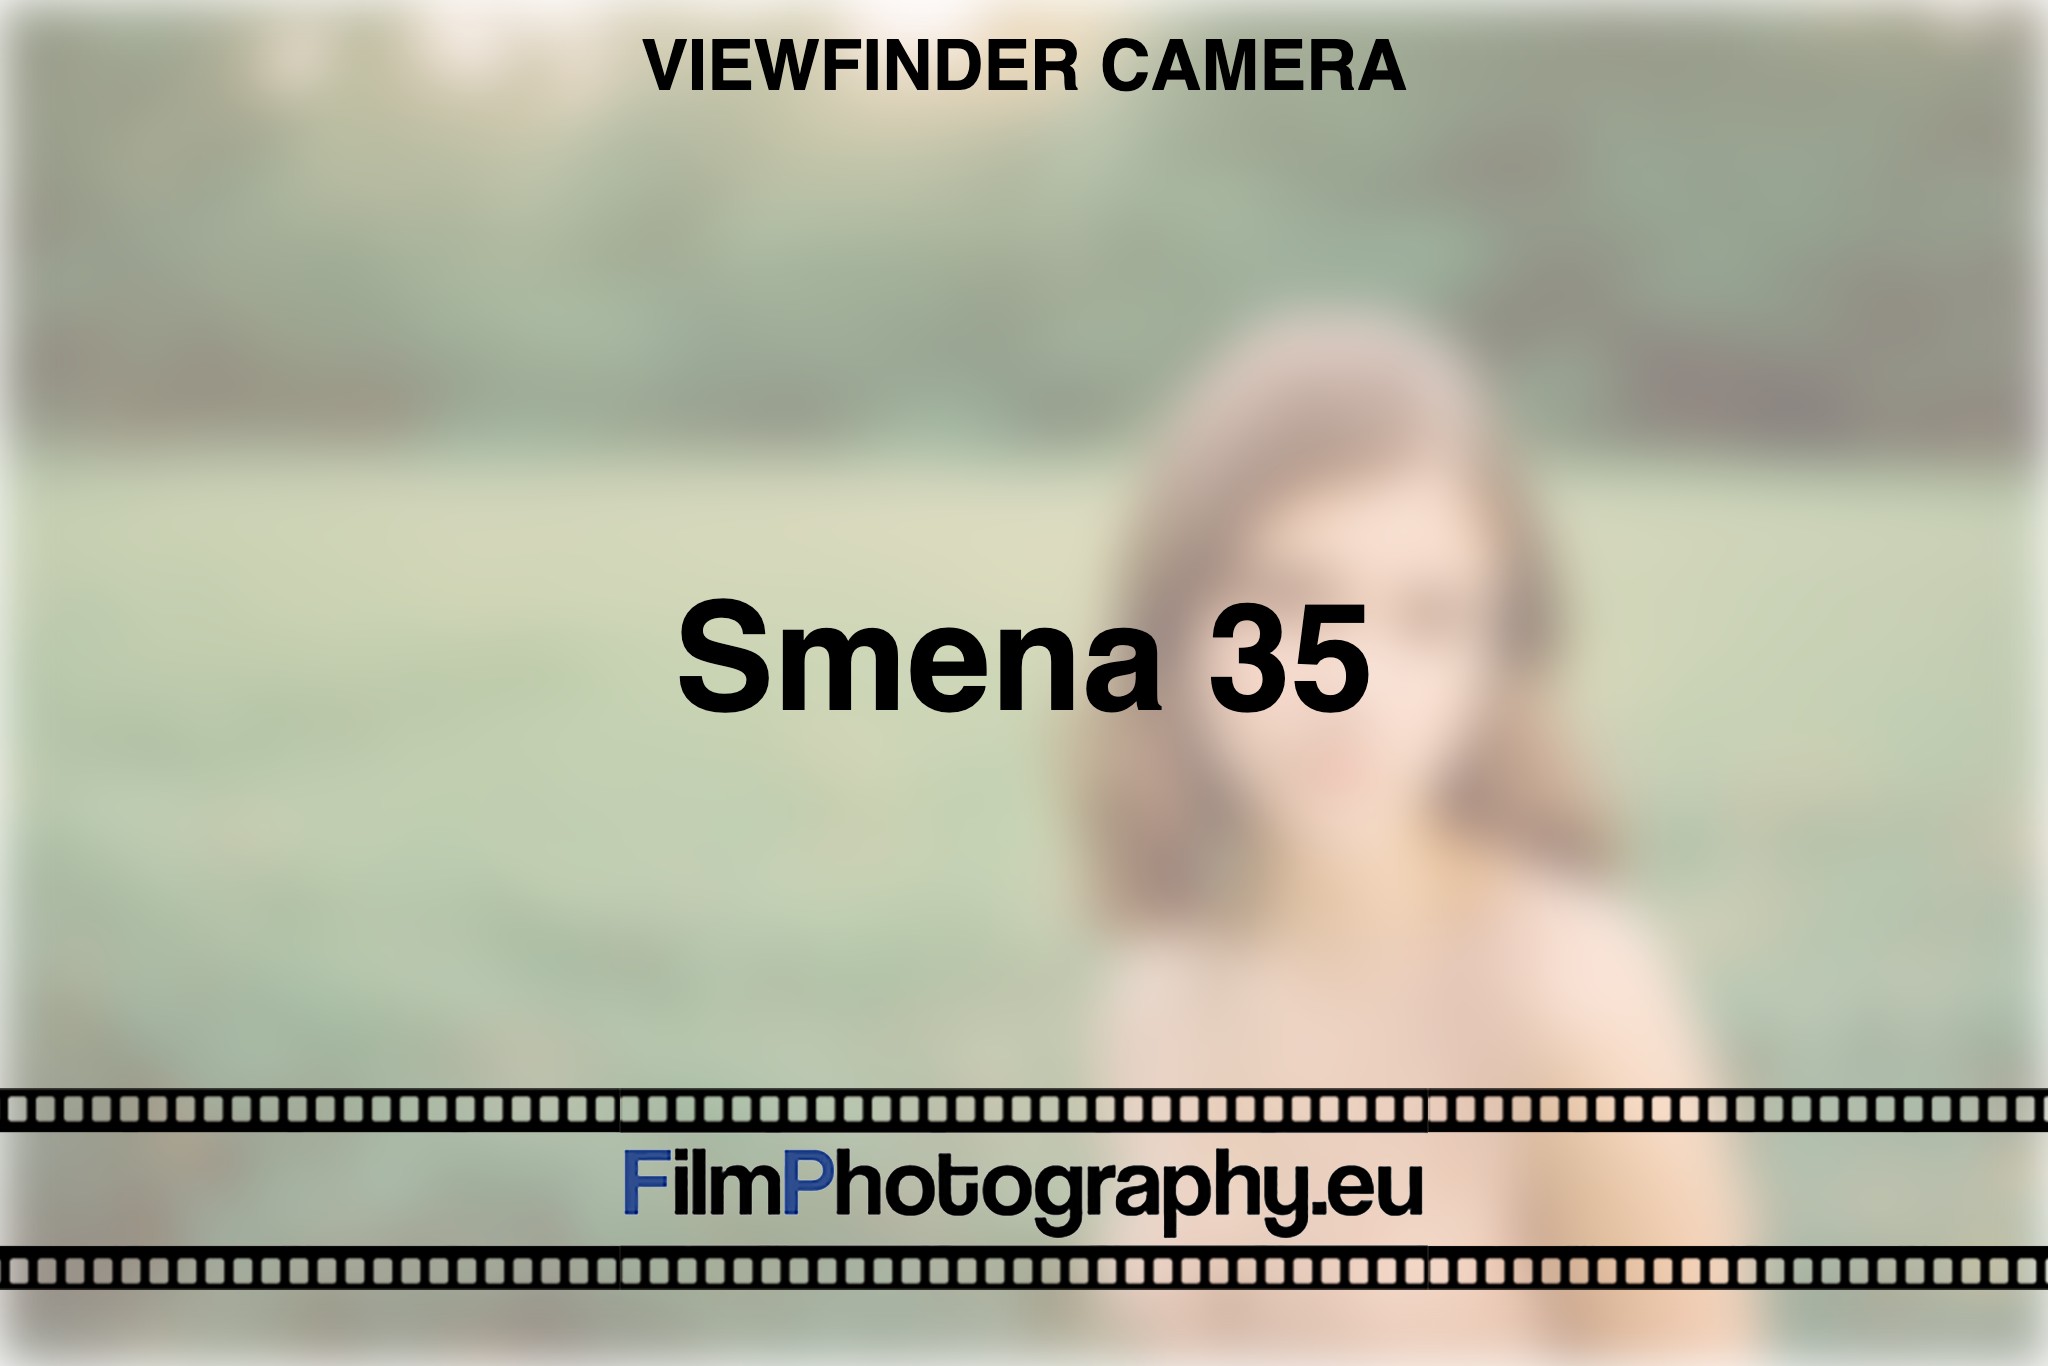 smena-35-viewfinder-camera-bnv